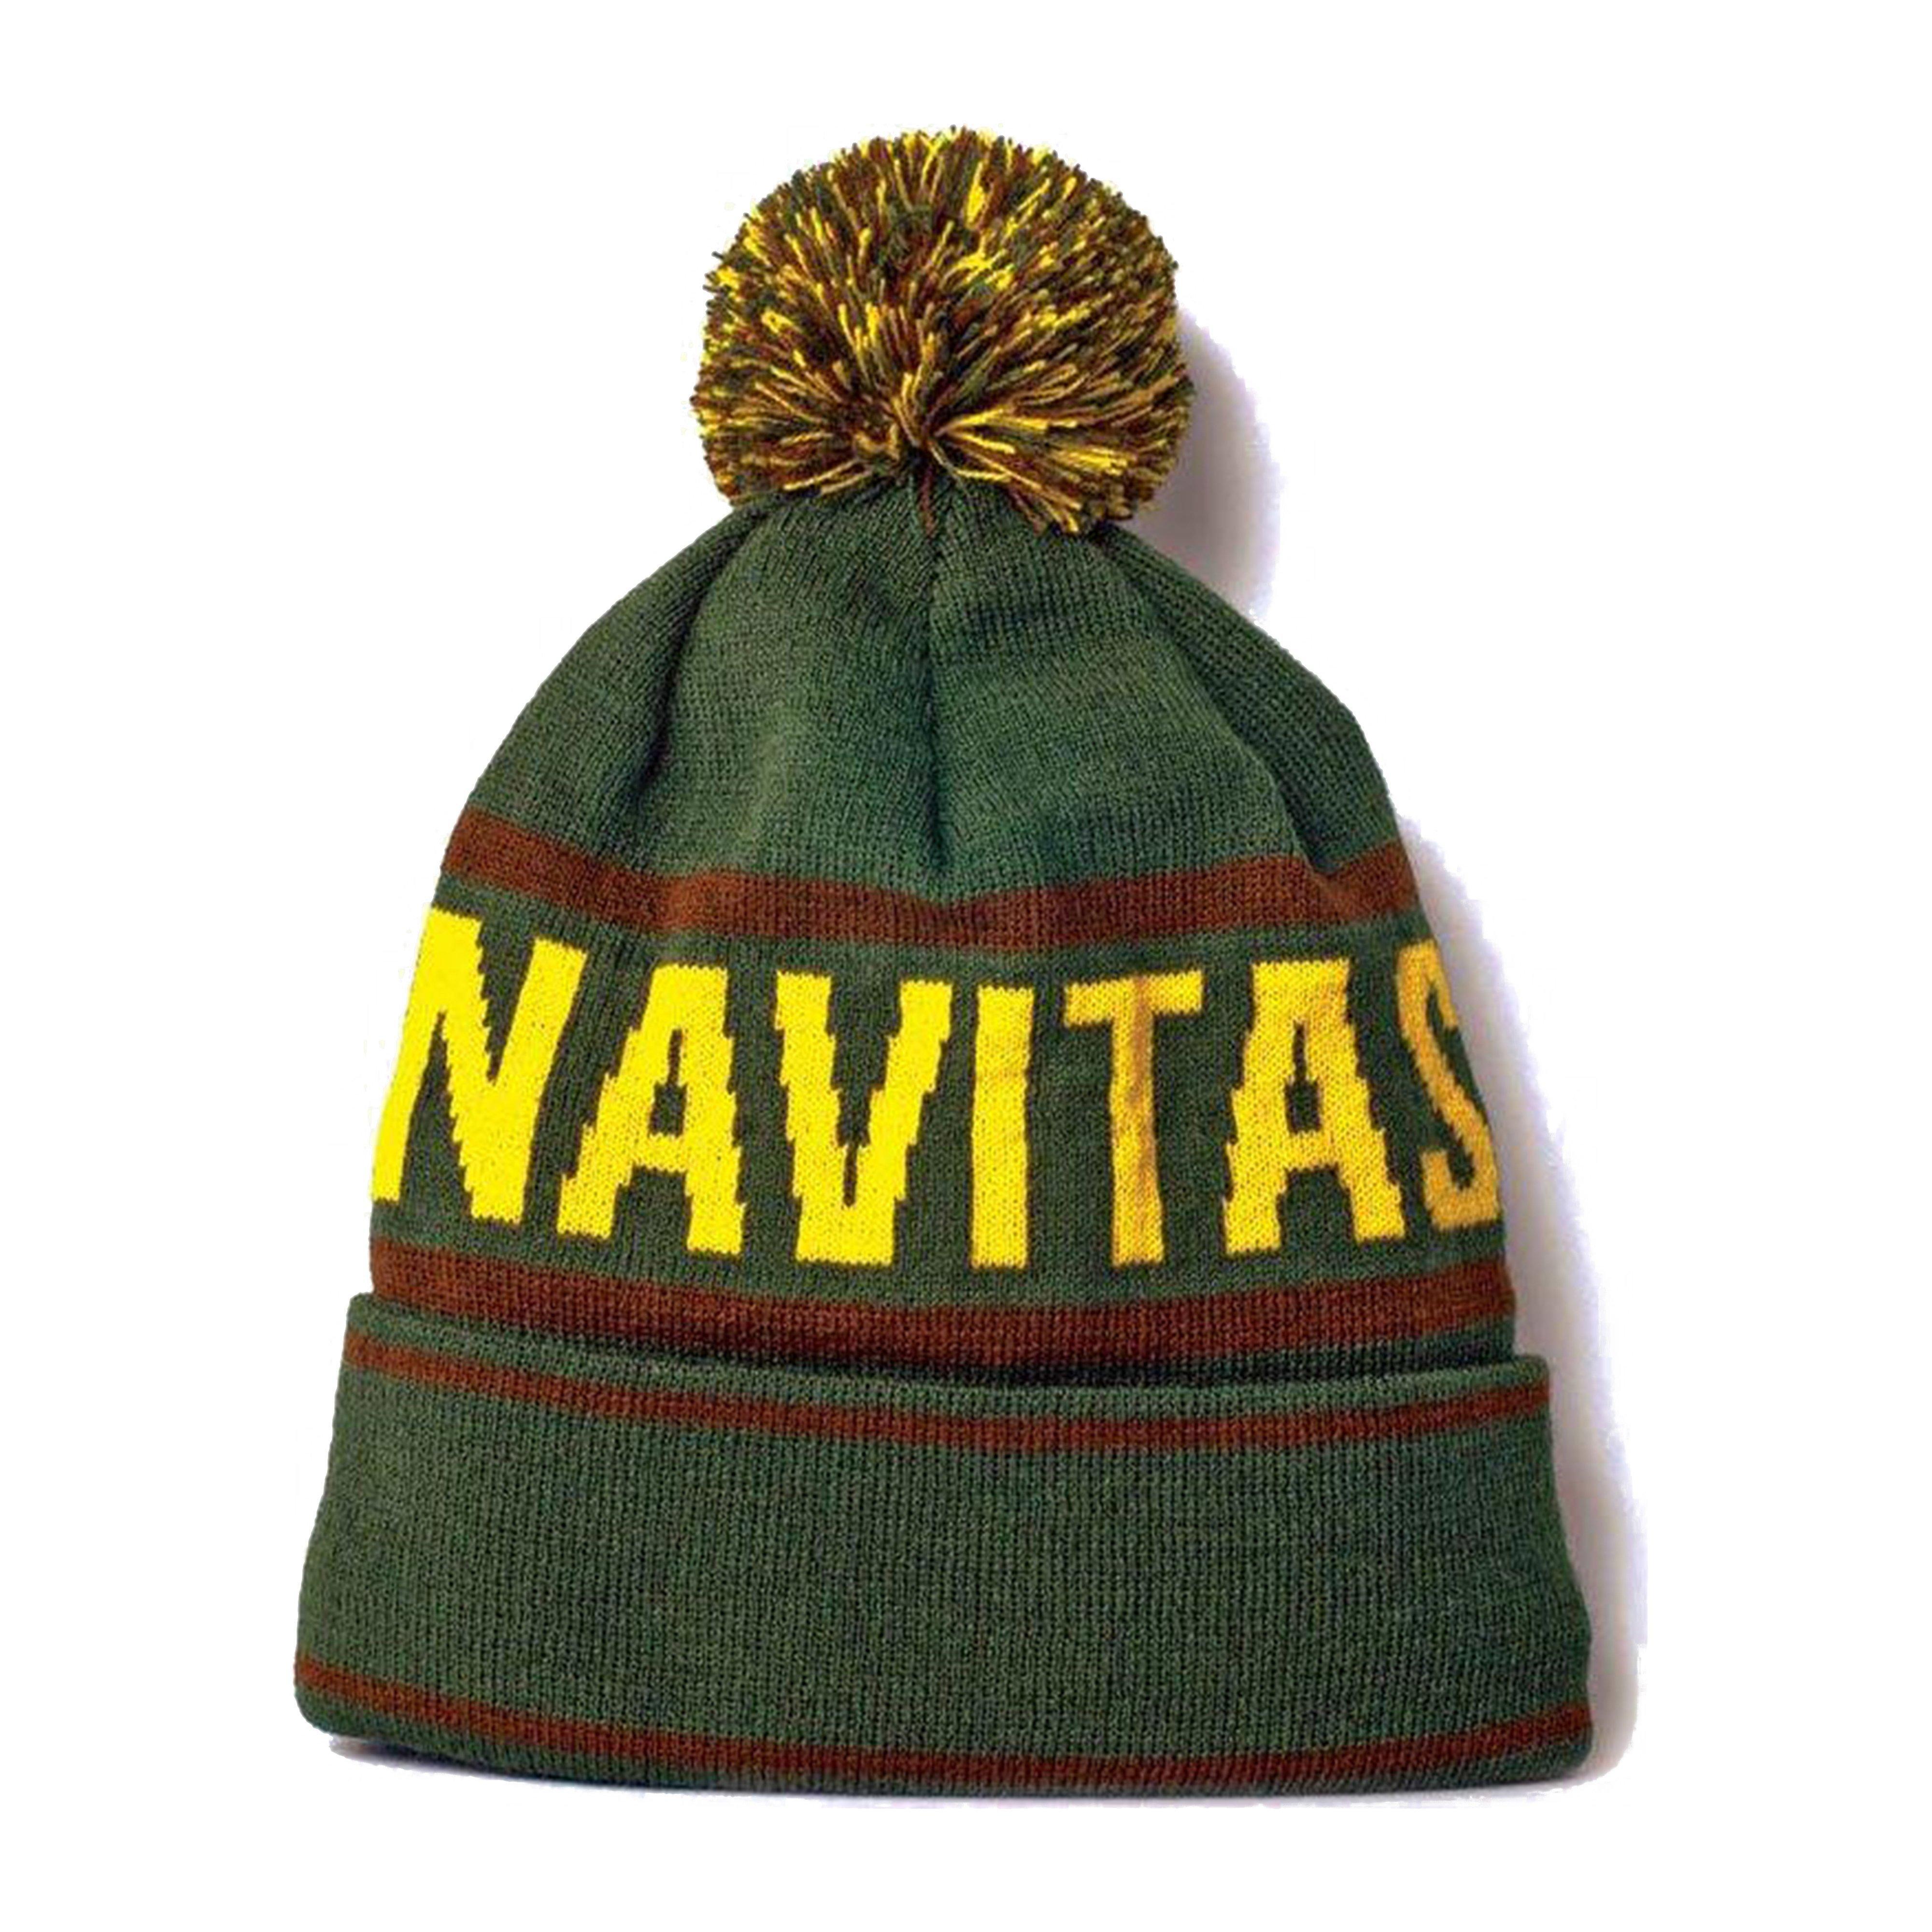 Navitas Ski Bobble Hat Review